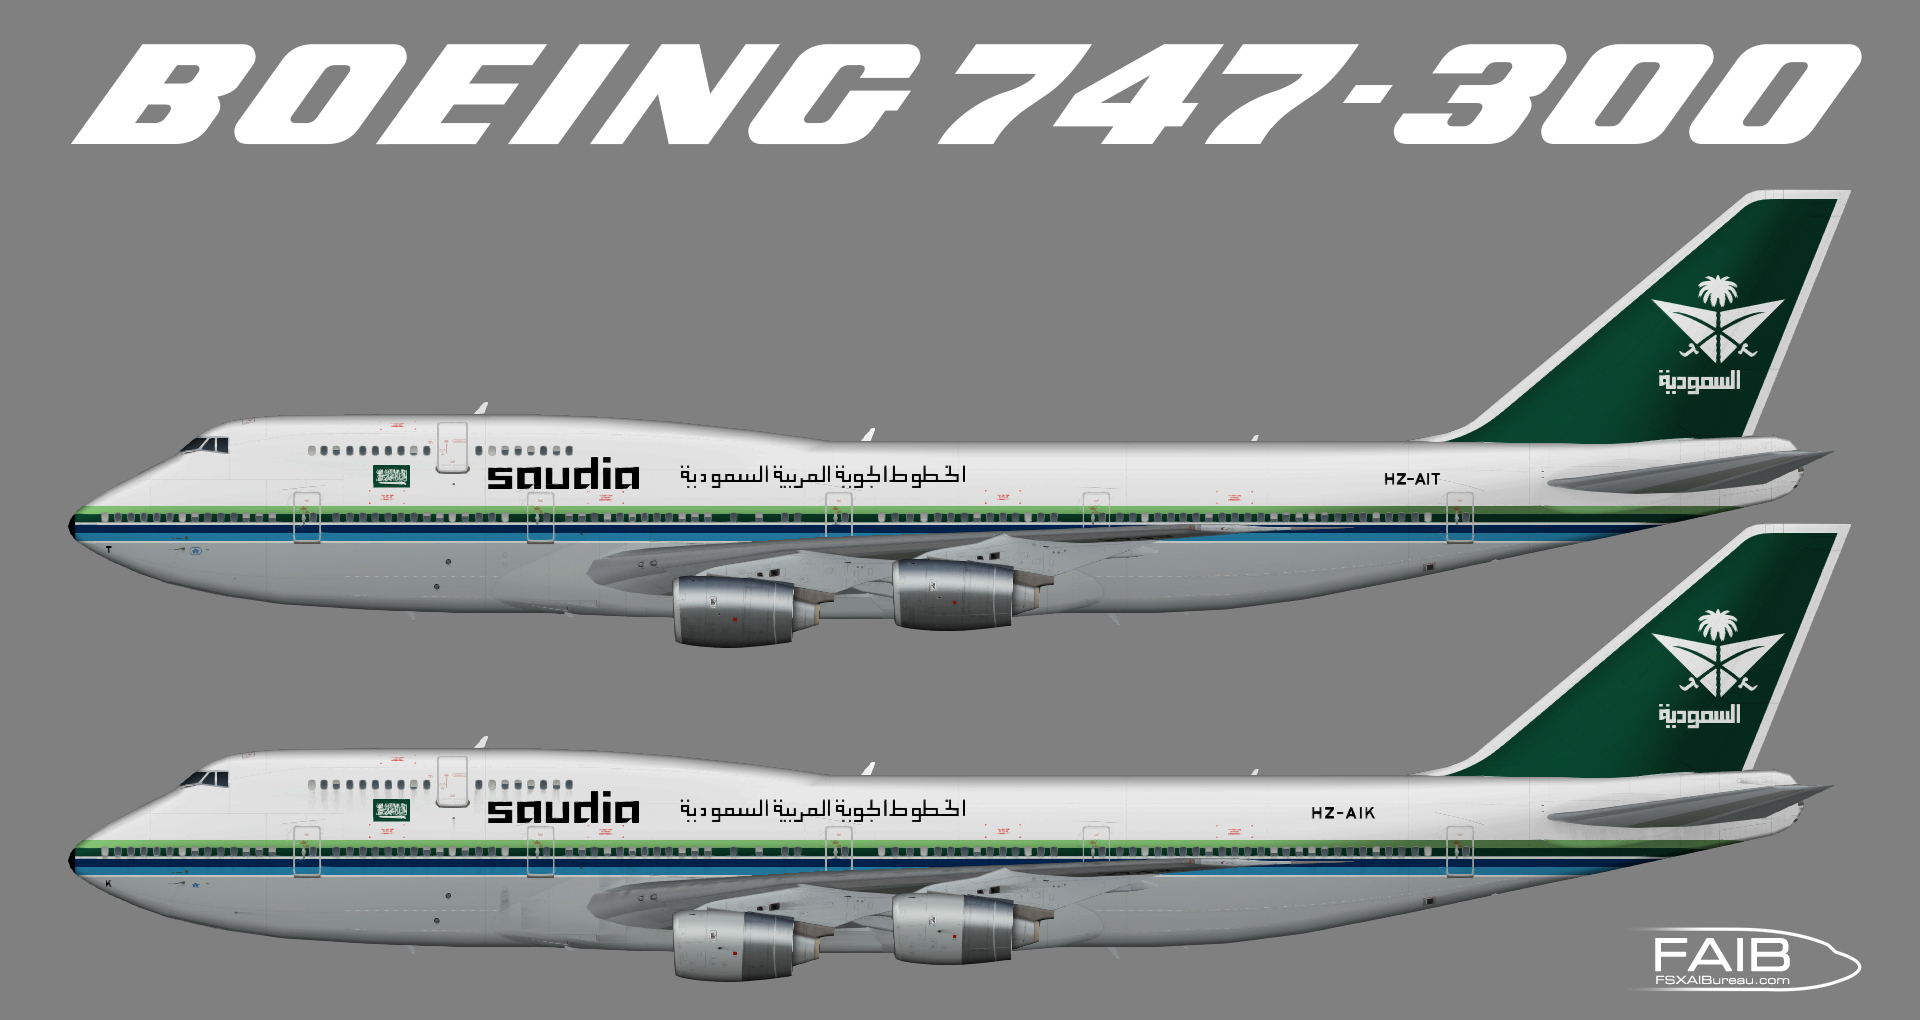 Saudia Boeing 747-300